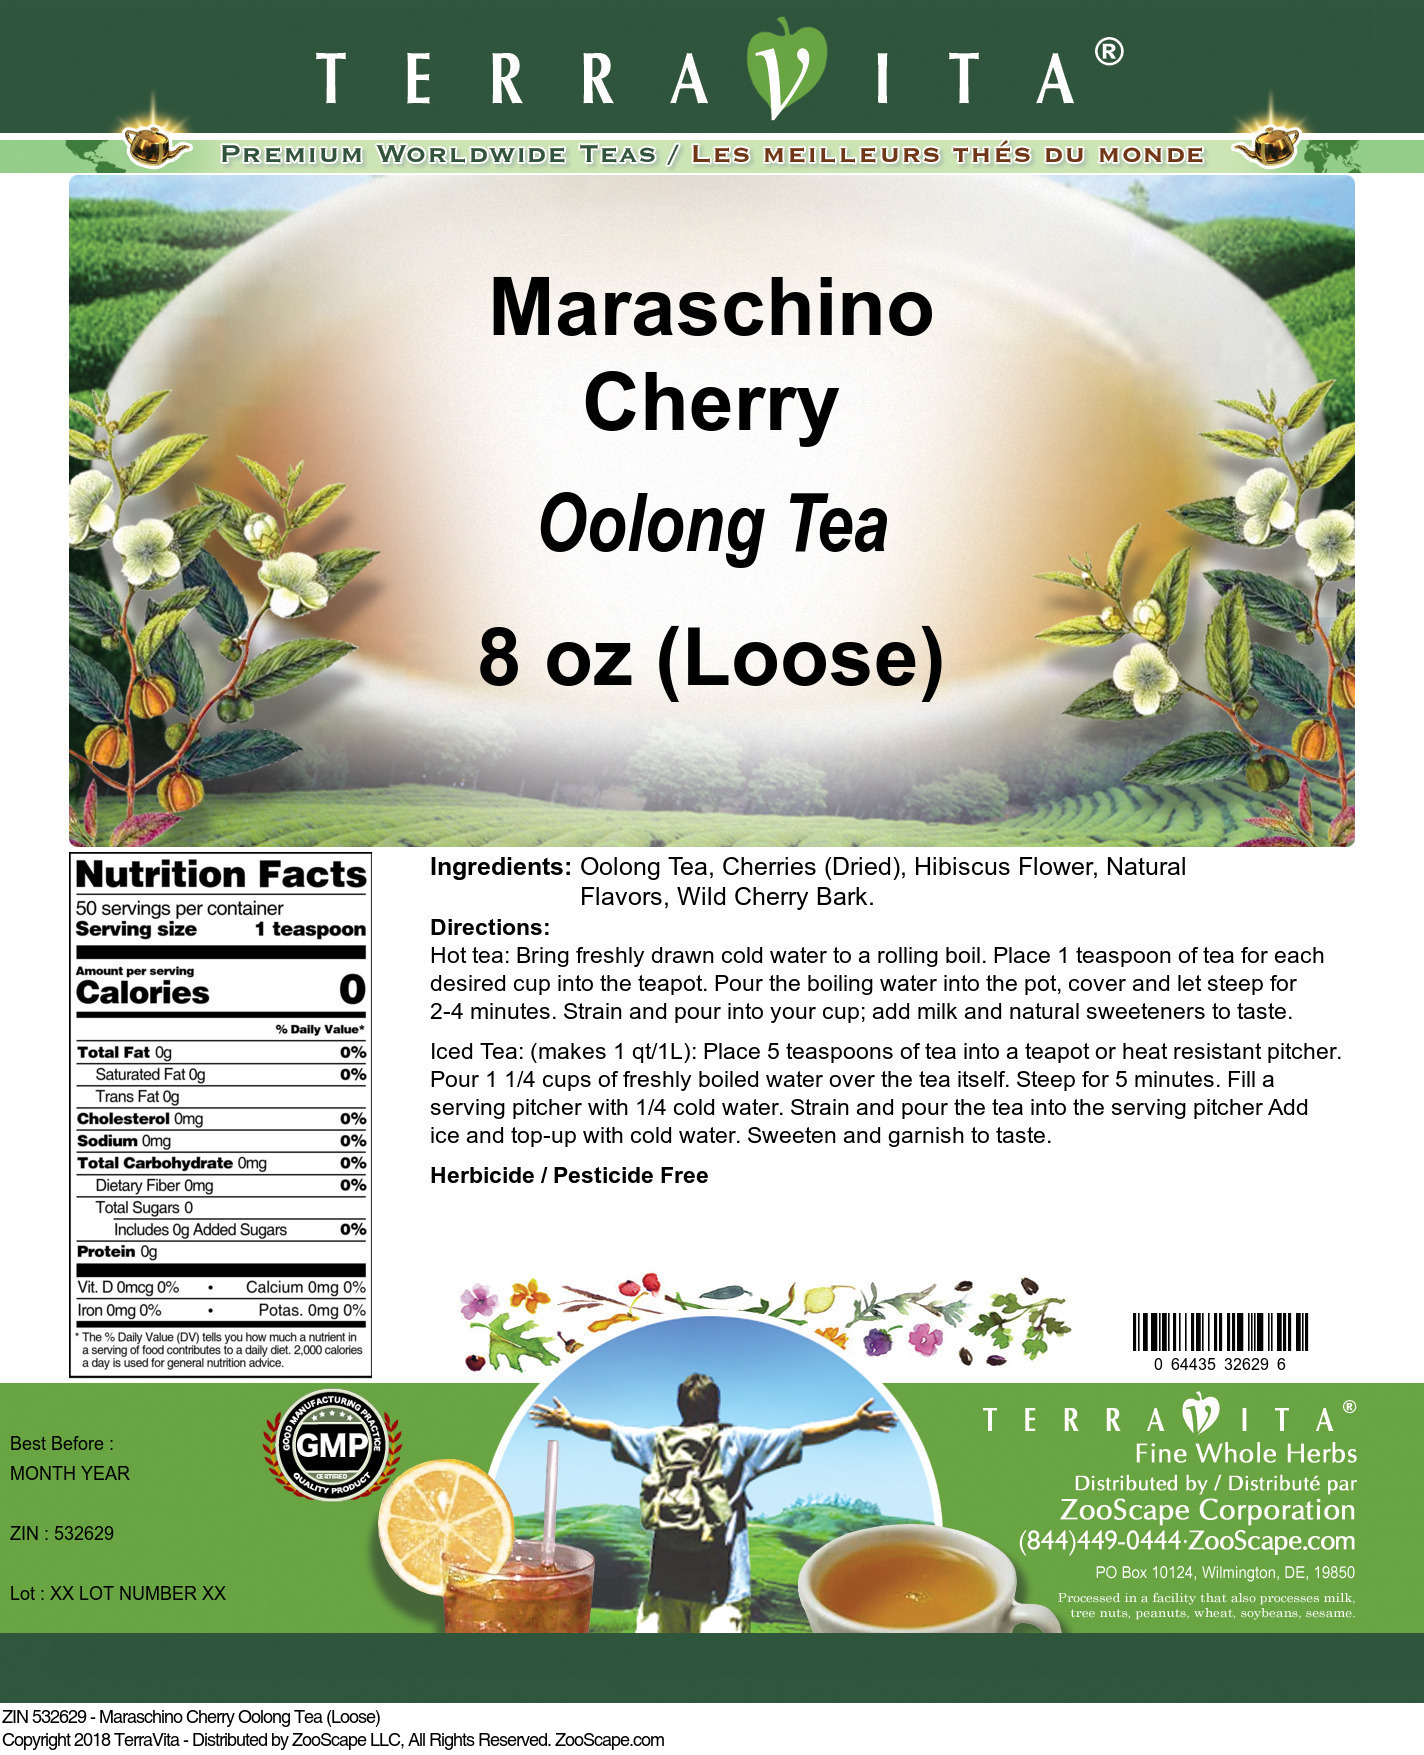 Maraschino Cherry Oolong Tea (Loose) - Label